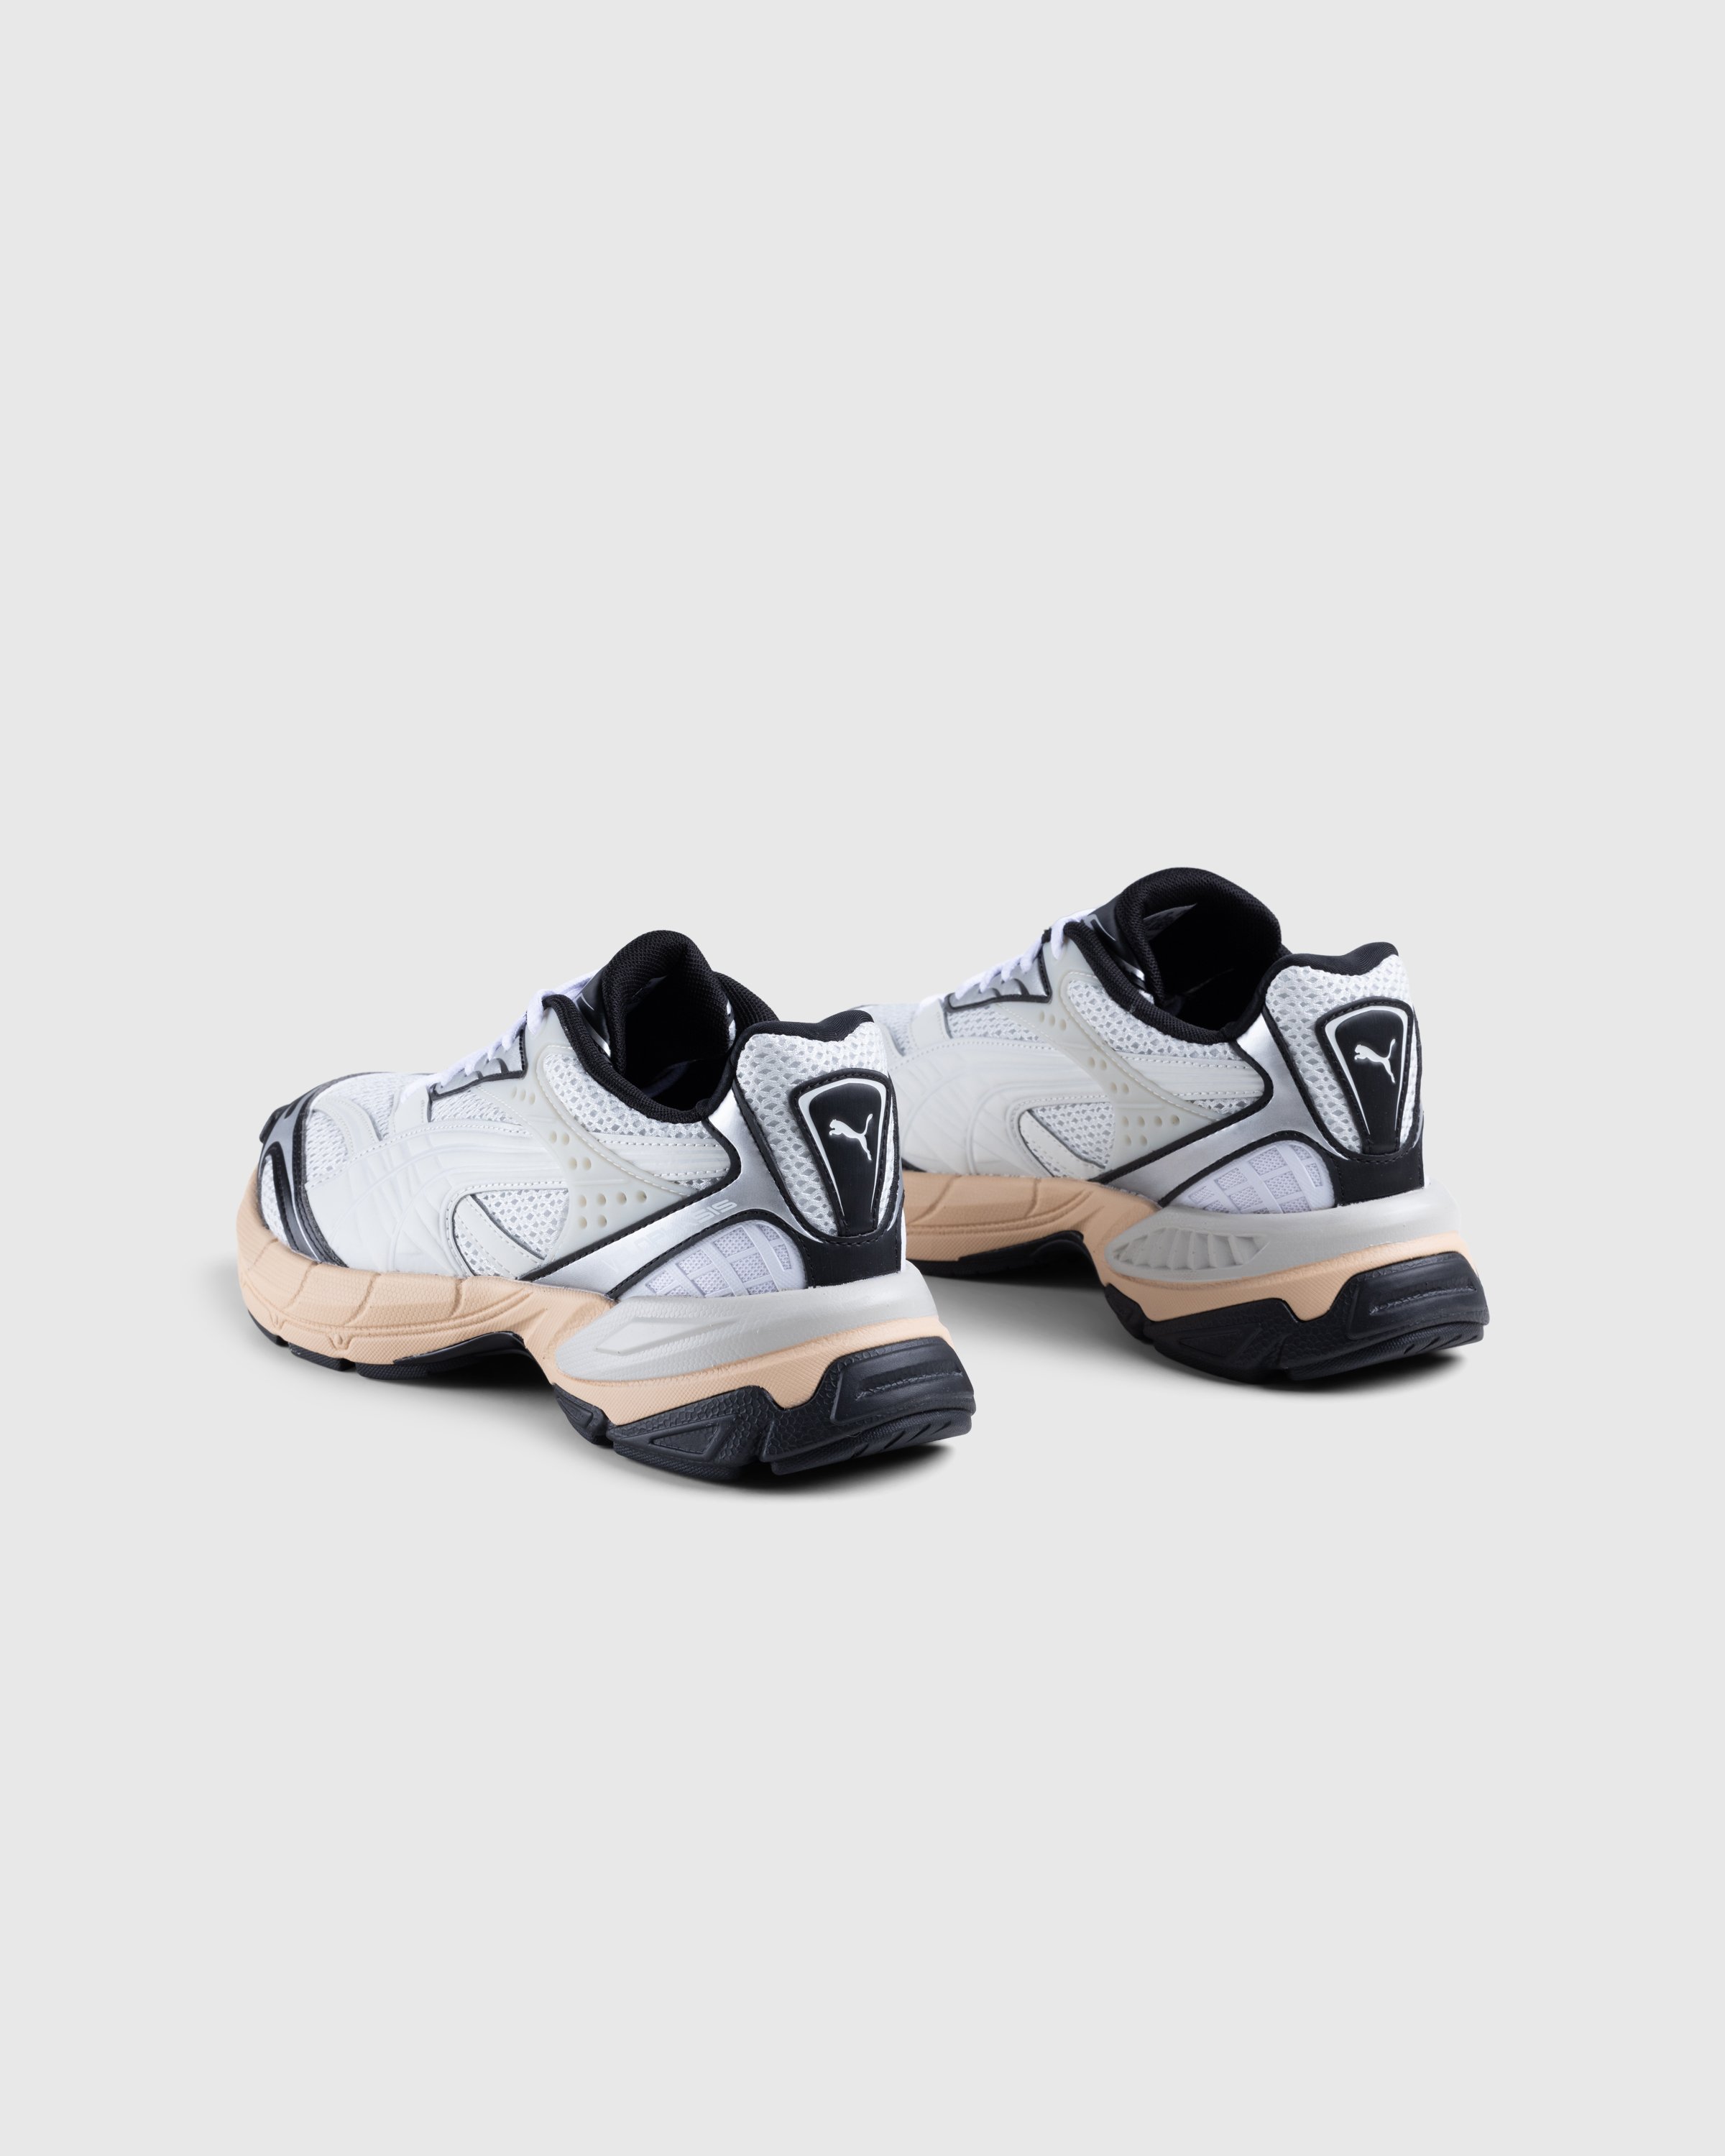 Puma - Velophasis Technisch Sedate Grey/Cashew - Footwear - Multi - Image 4